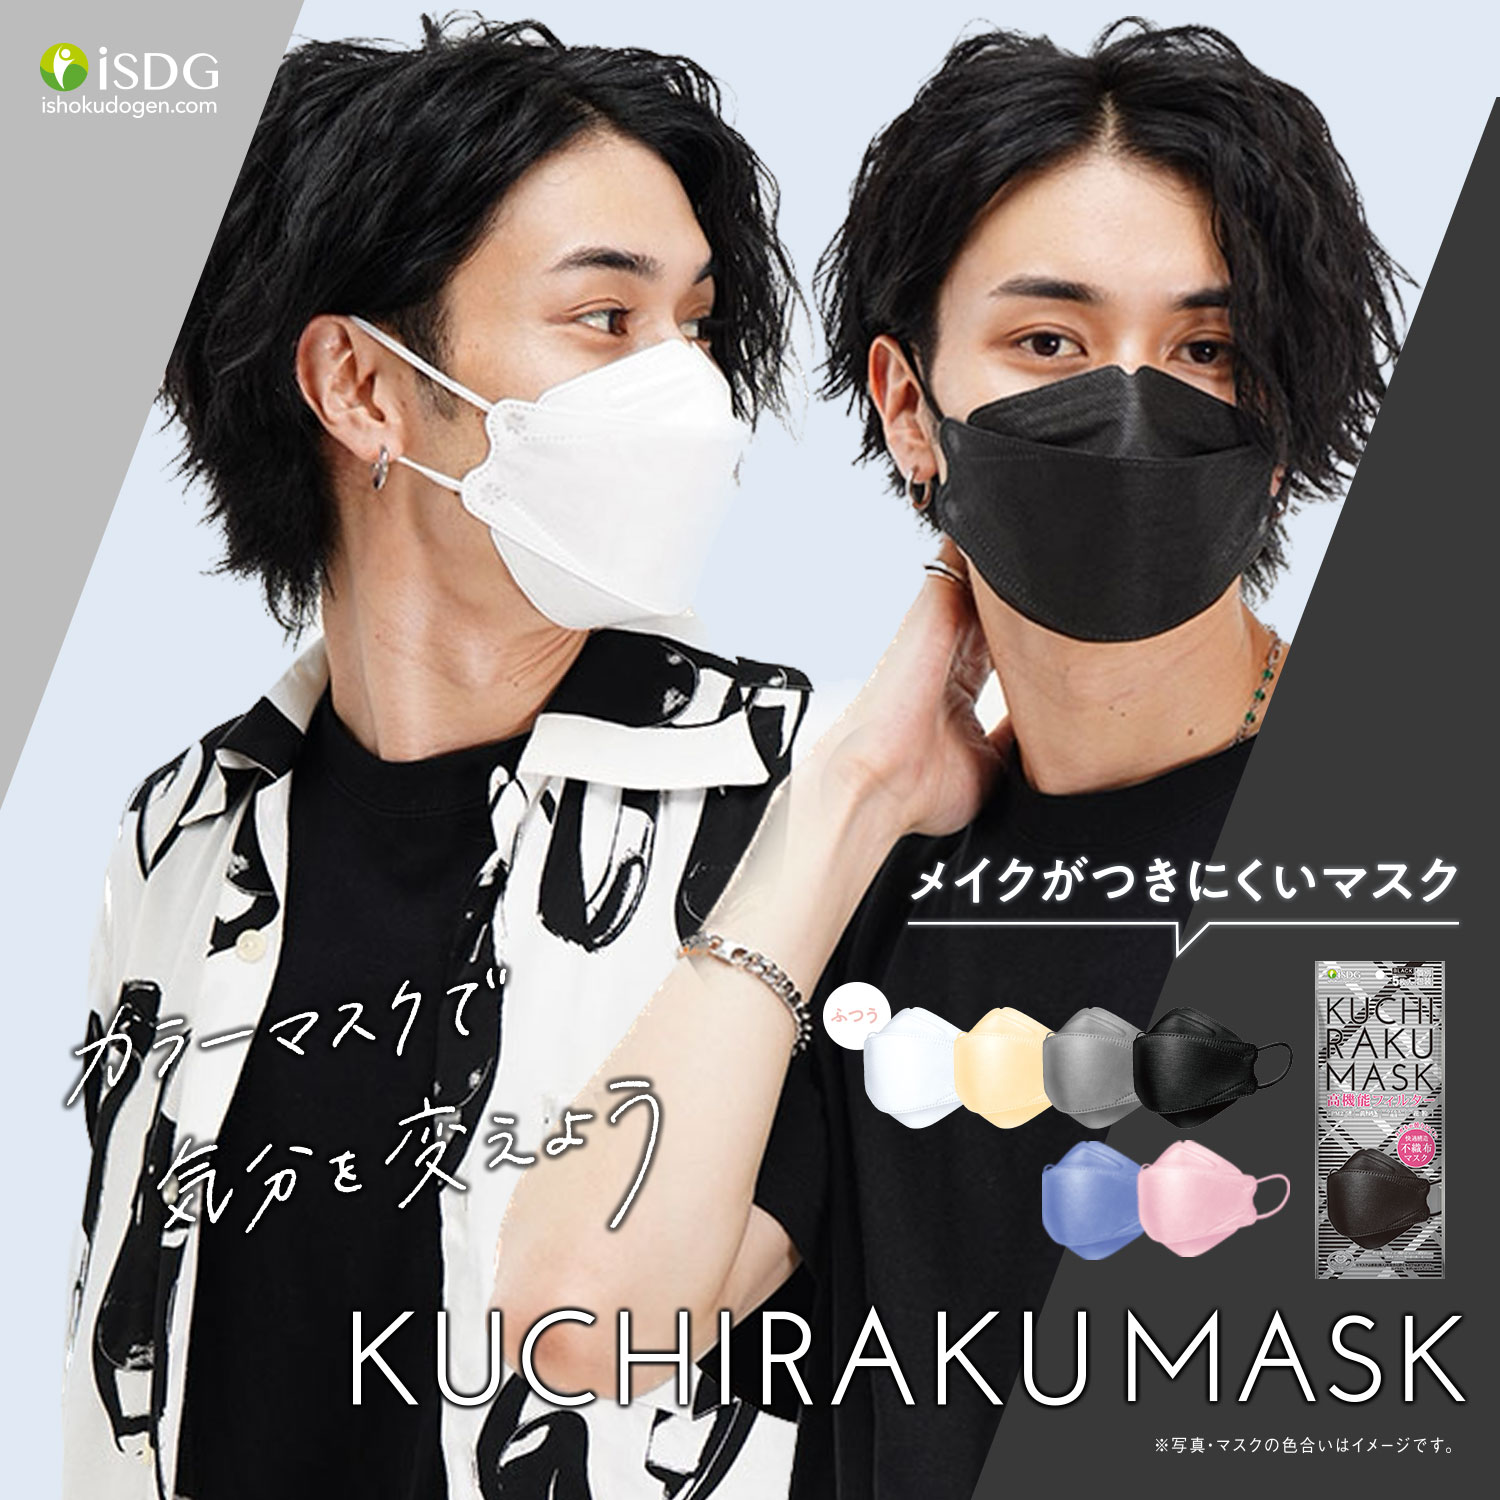 KUCHIRAKU MASK 5枚入 くちばし型マスク クチラクマスク クチバシマスク 不織布マスク マスク 個包装 ホワイト グレー ブラック ピンク  ベージュ パープル :kuchiraku-mask:ISDG 医食同源ドットコム 通販 